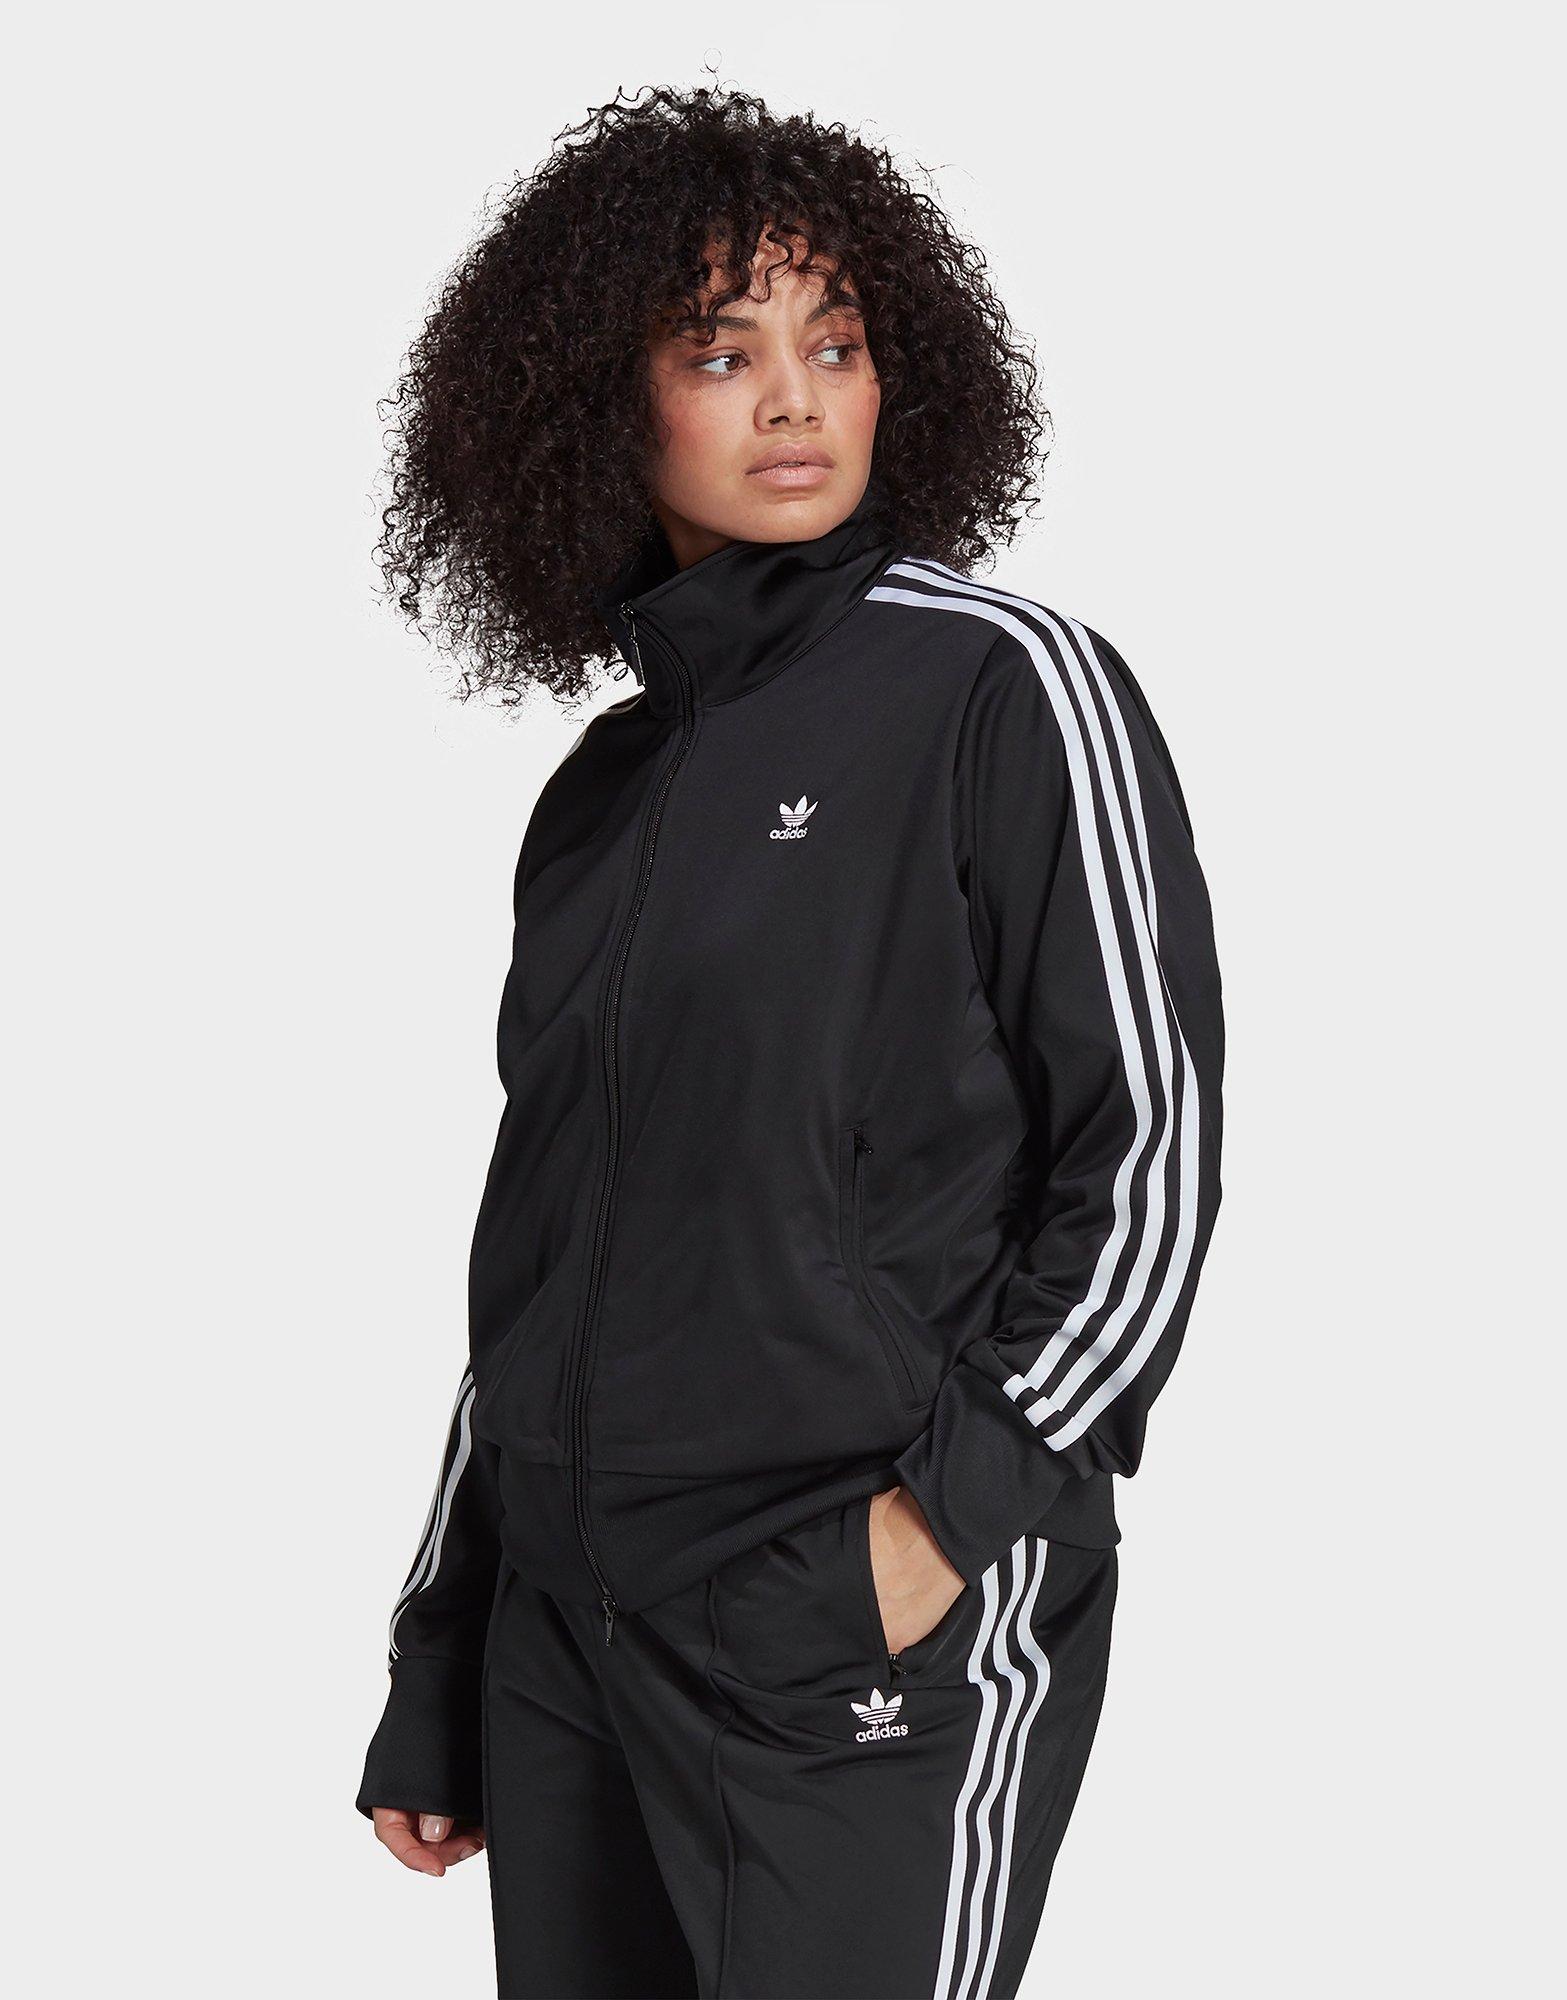 Black Adidas Originals 3-Stripes Trefoil Woven Track Top JD Sports UK ...